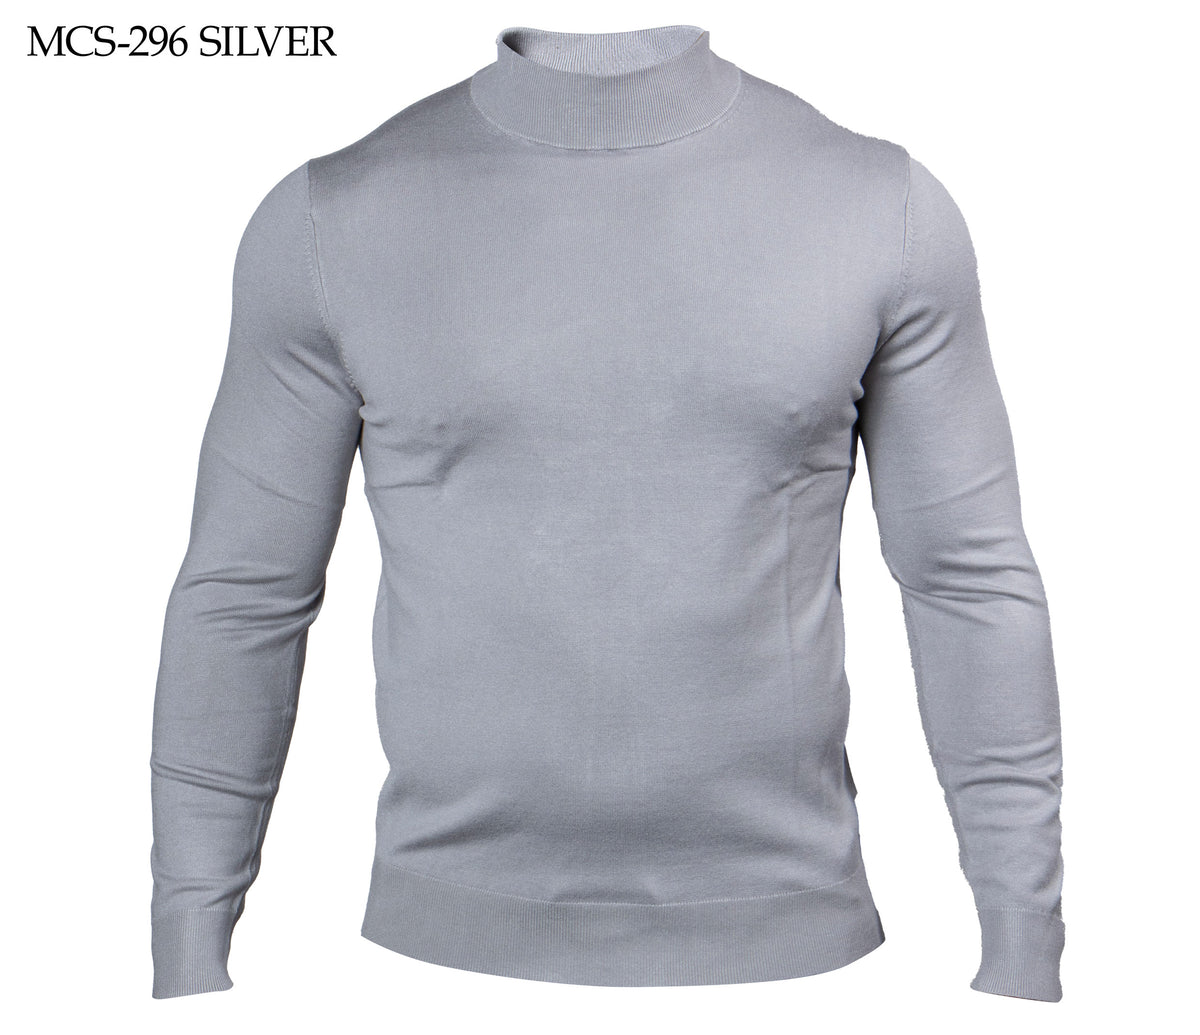 Prestige Silver Mock Neck Elite Sweater - Dudes Boutique